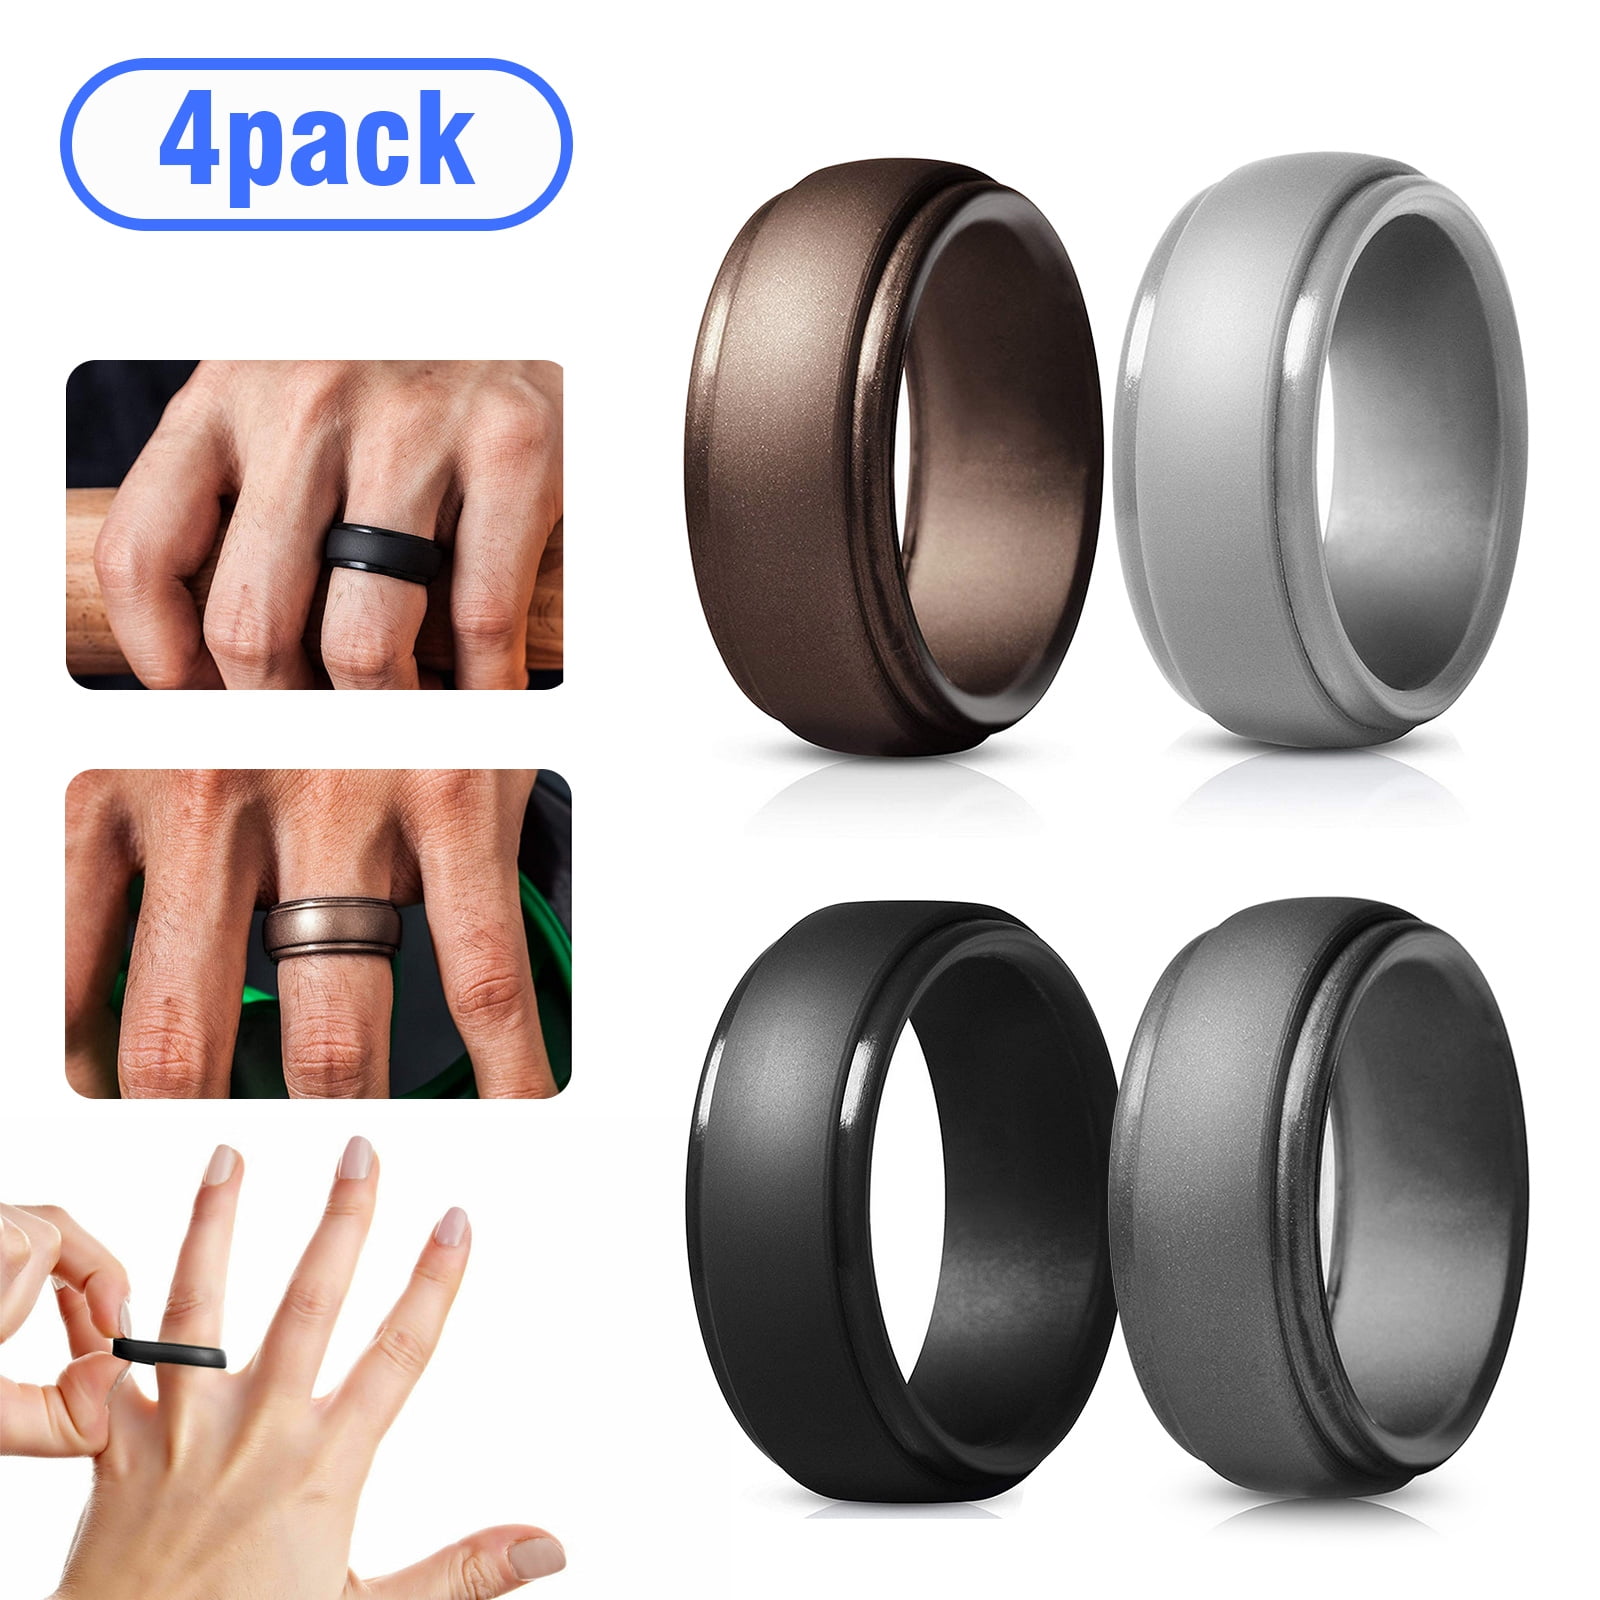 EEEkit - EEEkit 4Pack Silicone Wedding Ring for Women ...